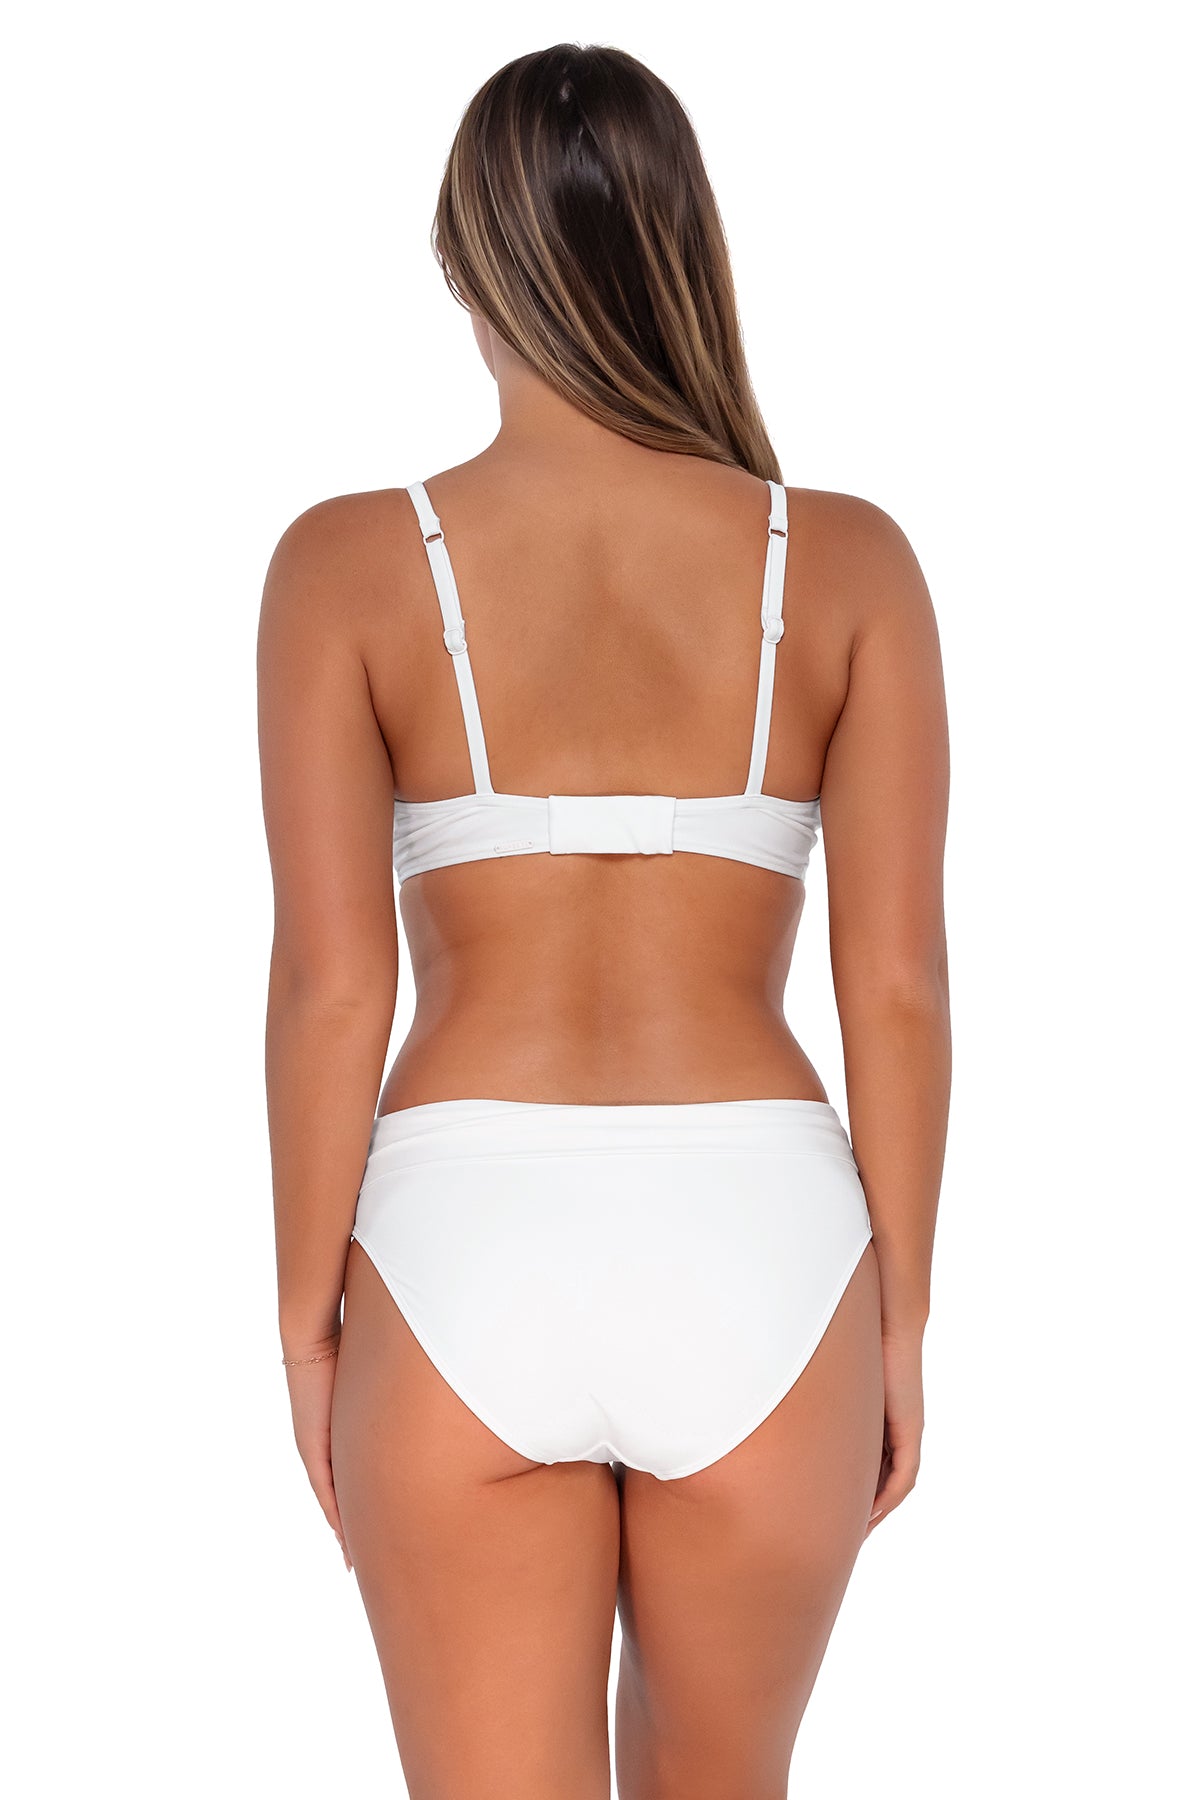 Back pose #1 of Taylor wearing Sunsets White Lily Kauai Keyhole Top with matching Hannah High Waist bikini bottom showing folded waist